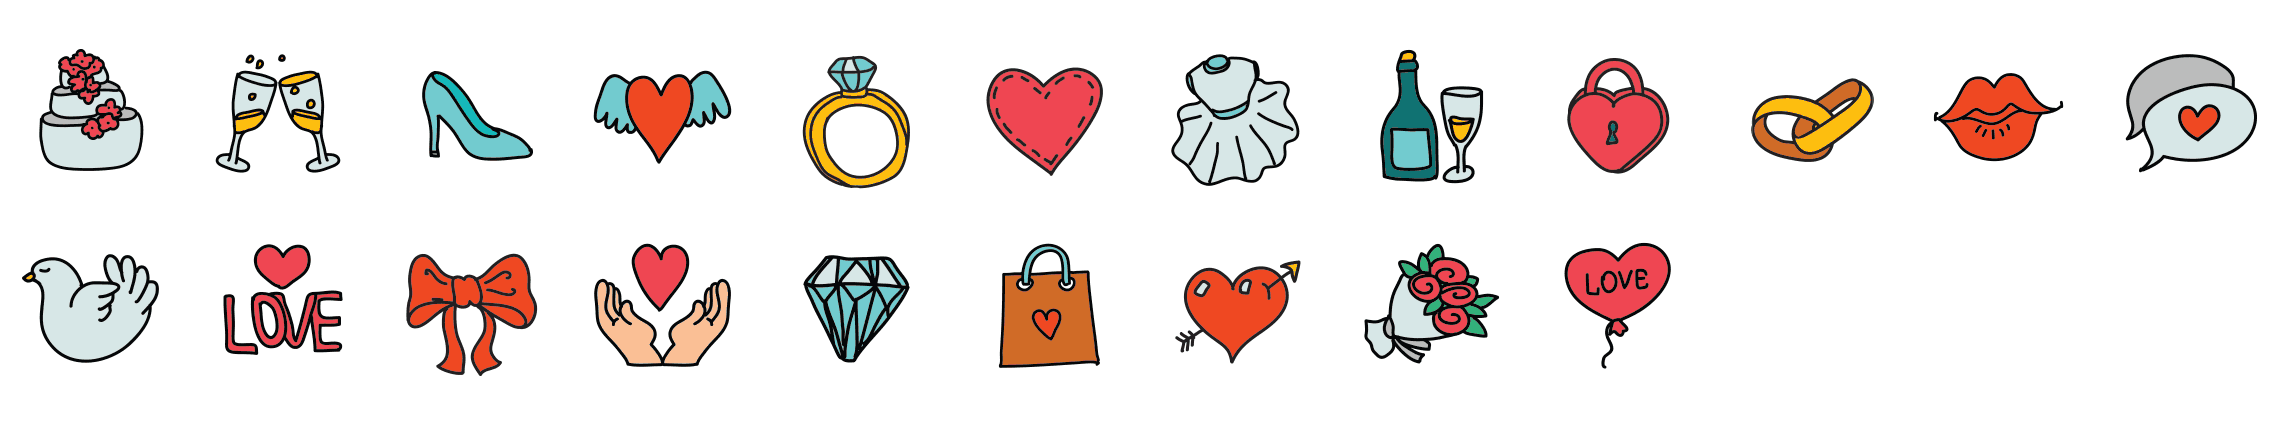 Romance-doodle-icons